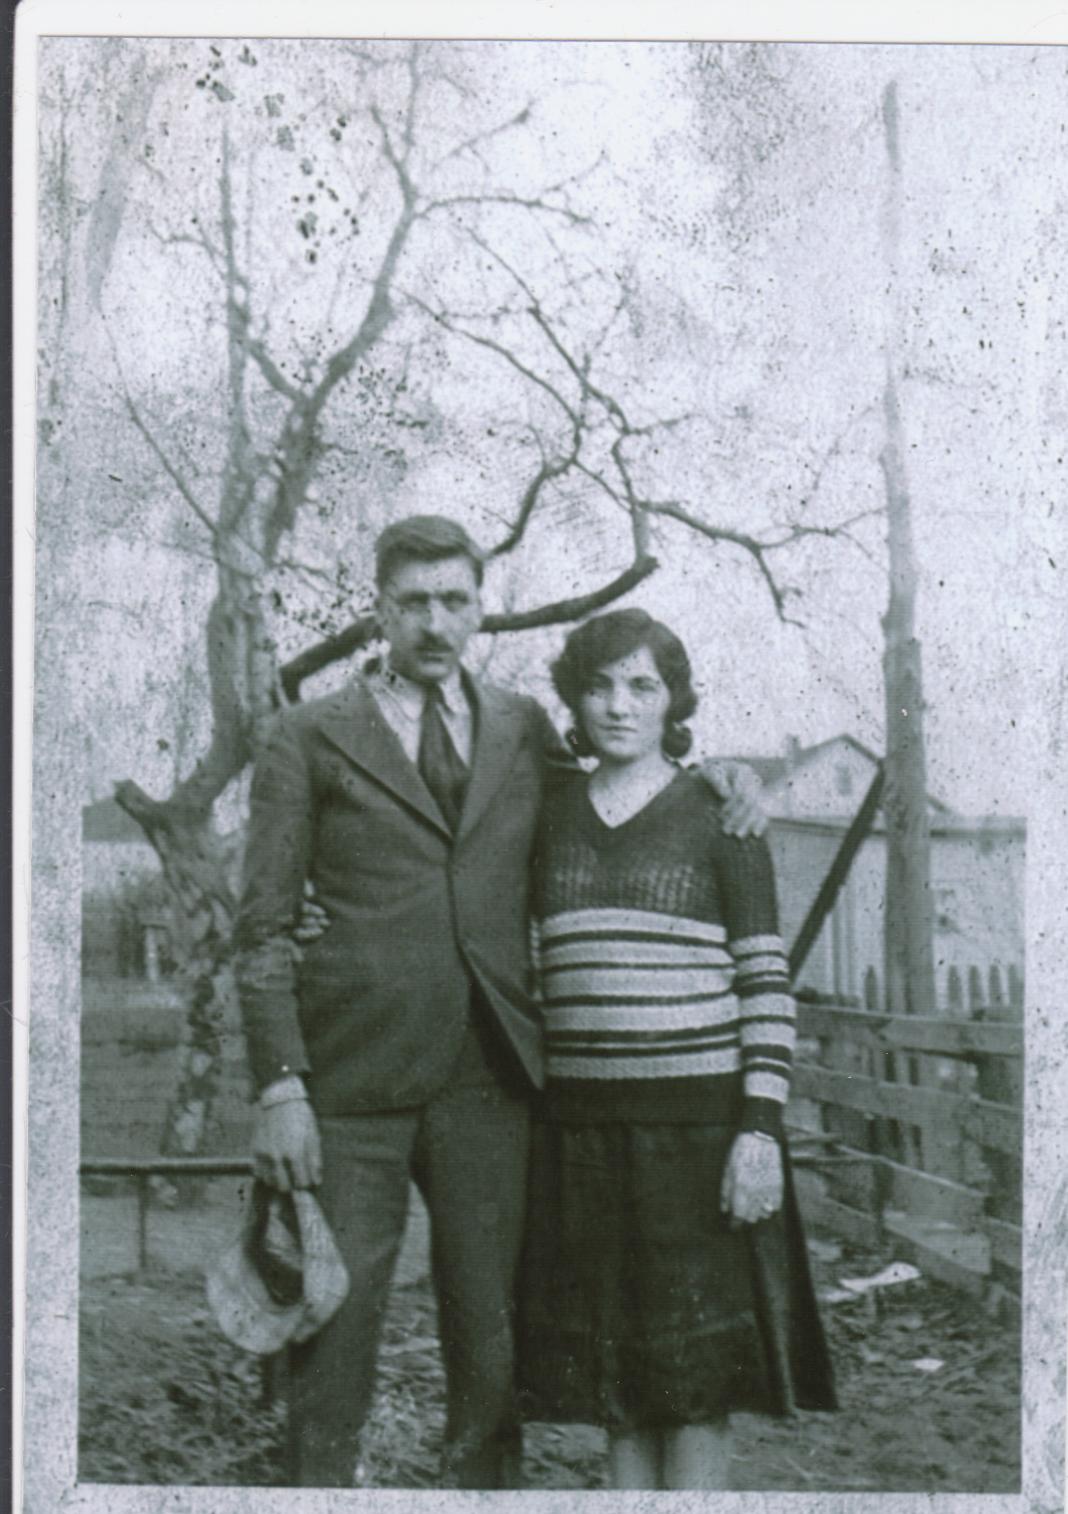 My grandparents, circa 1928